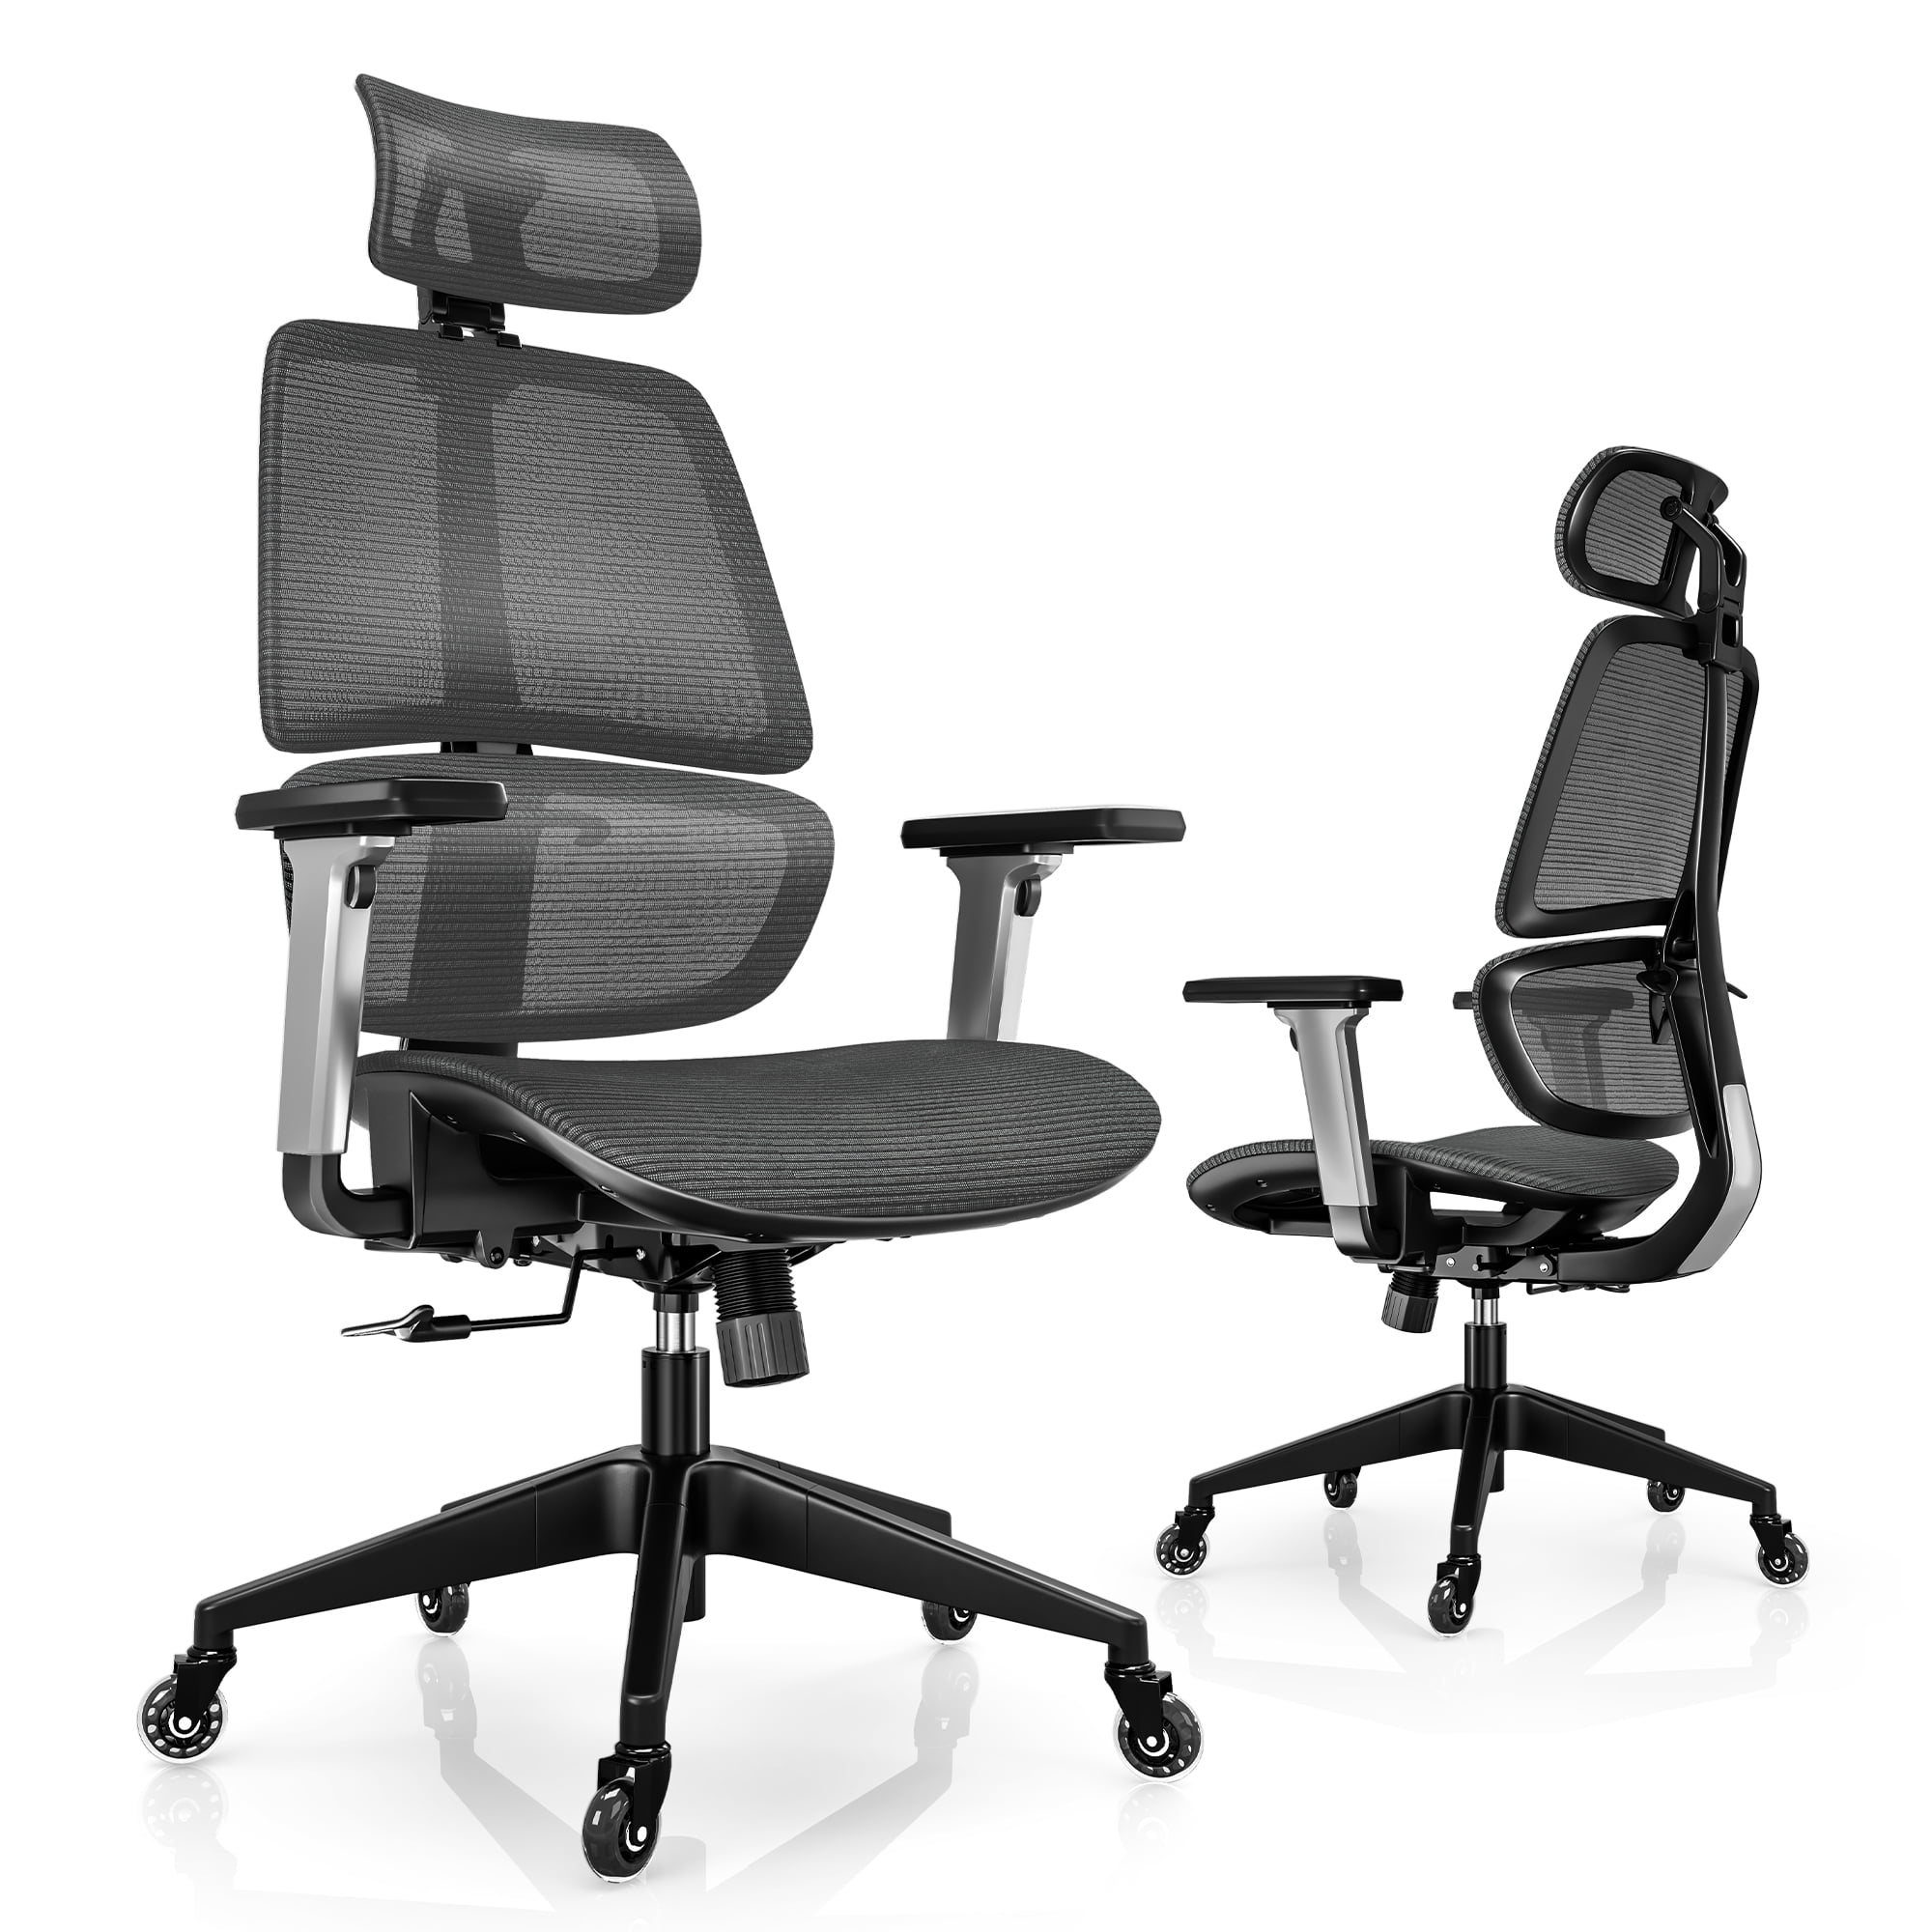 Golf 4 legs - KOREN - Office Chairs & Seating, Ergonomic Office